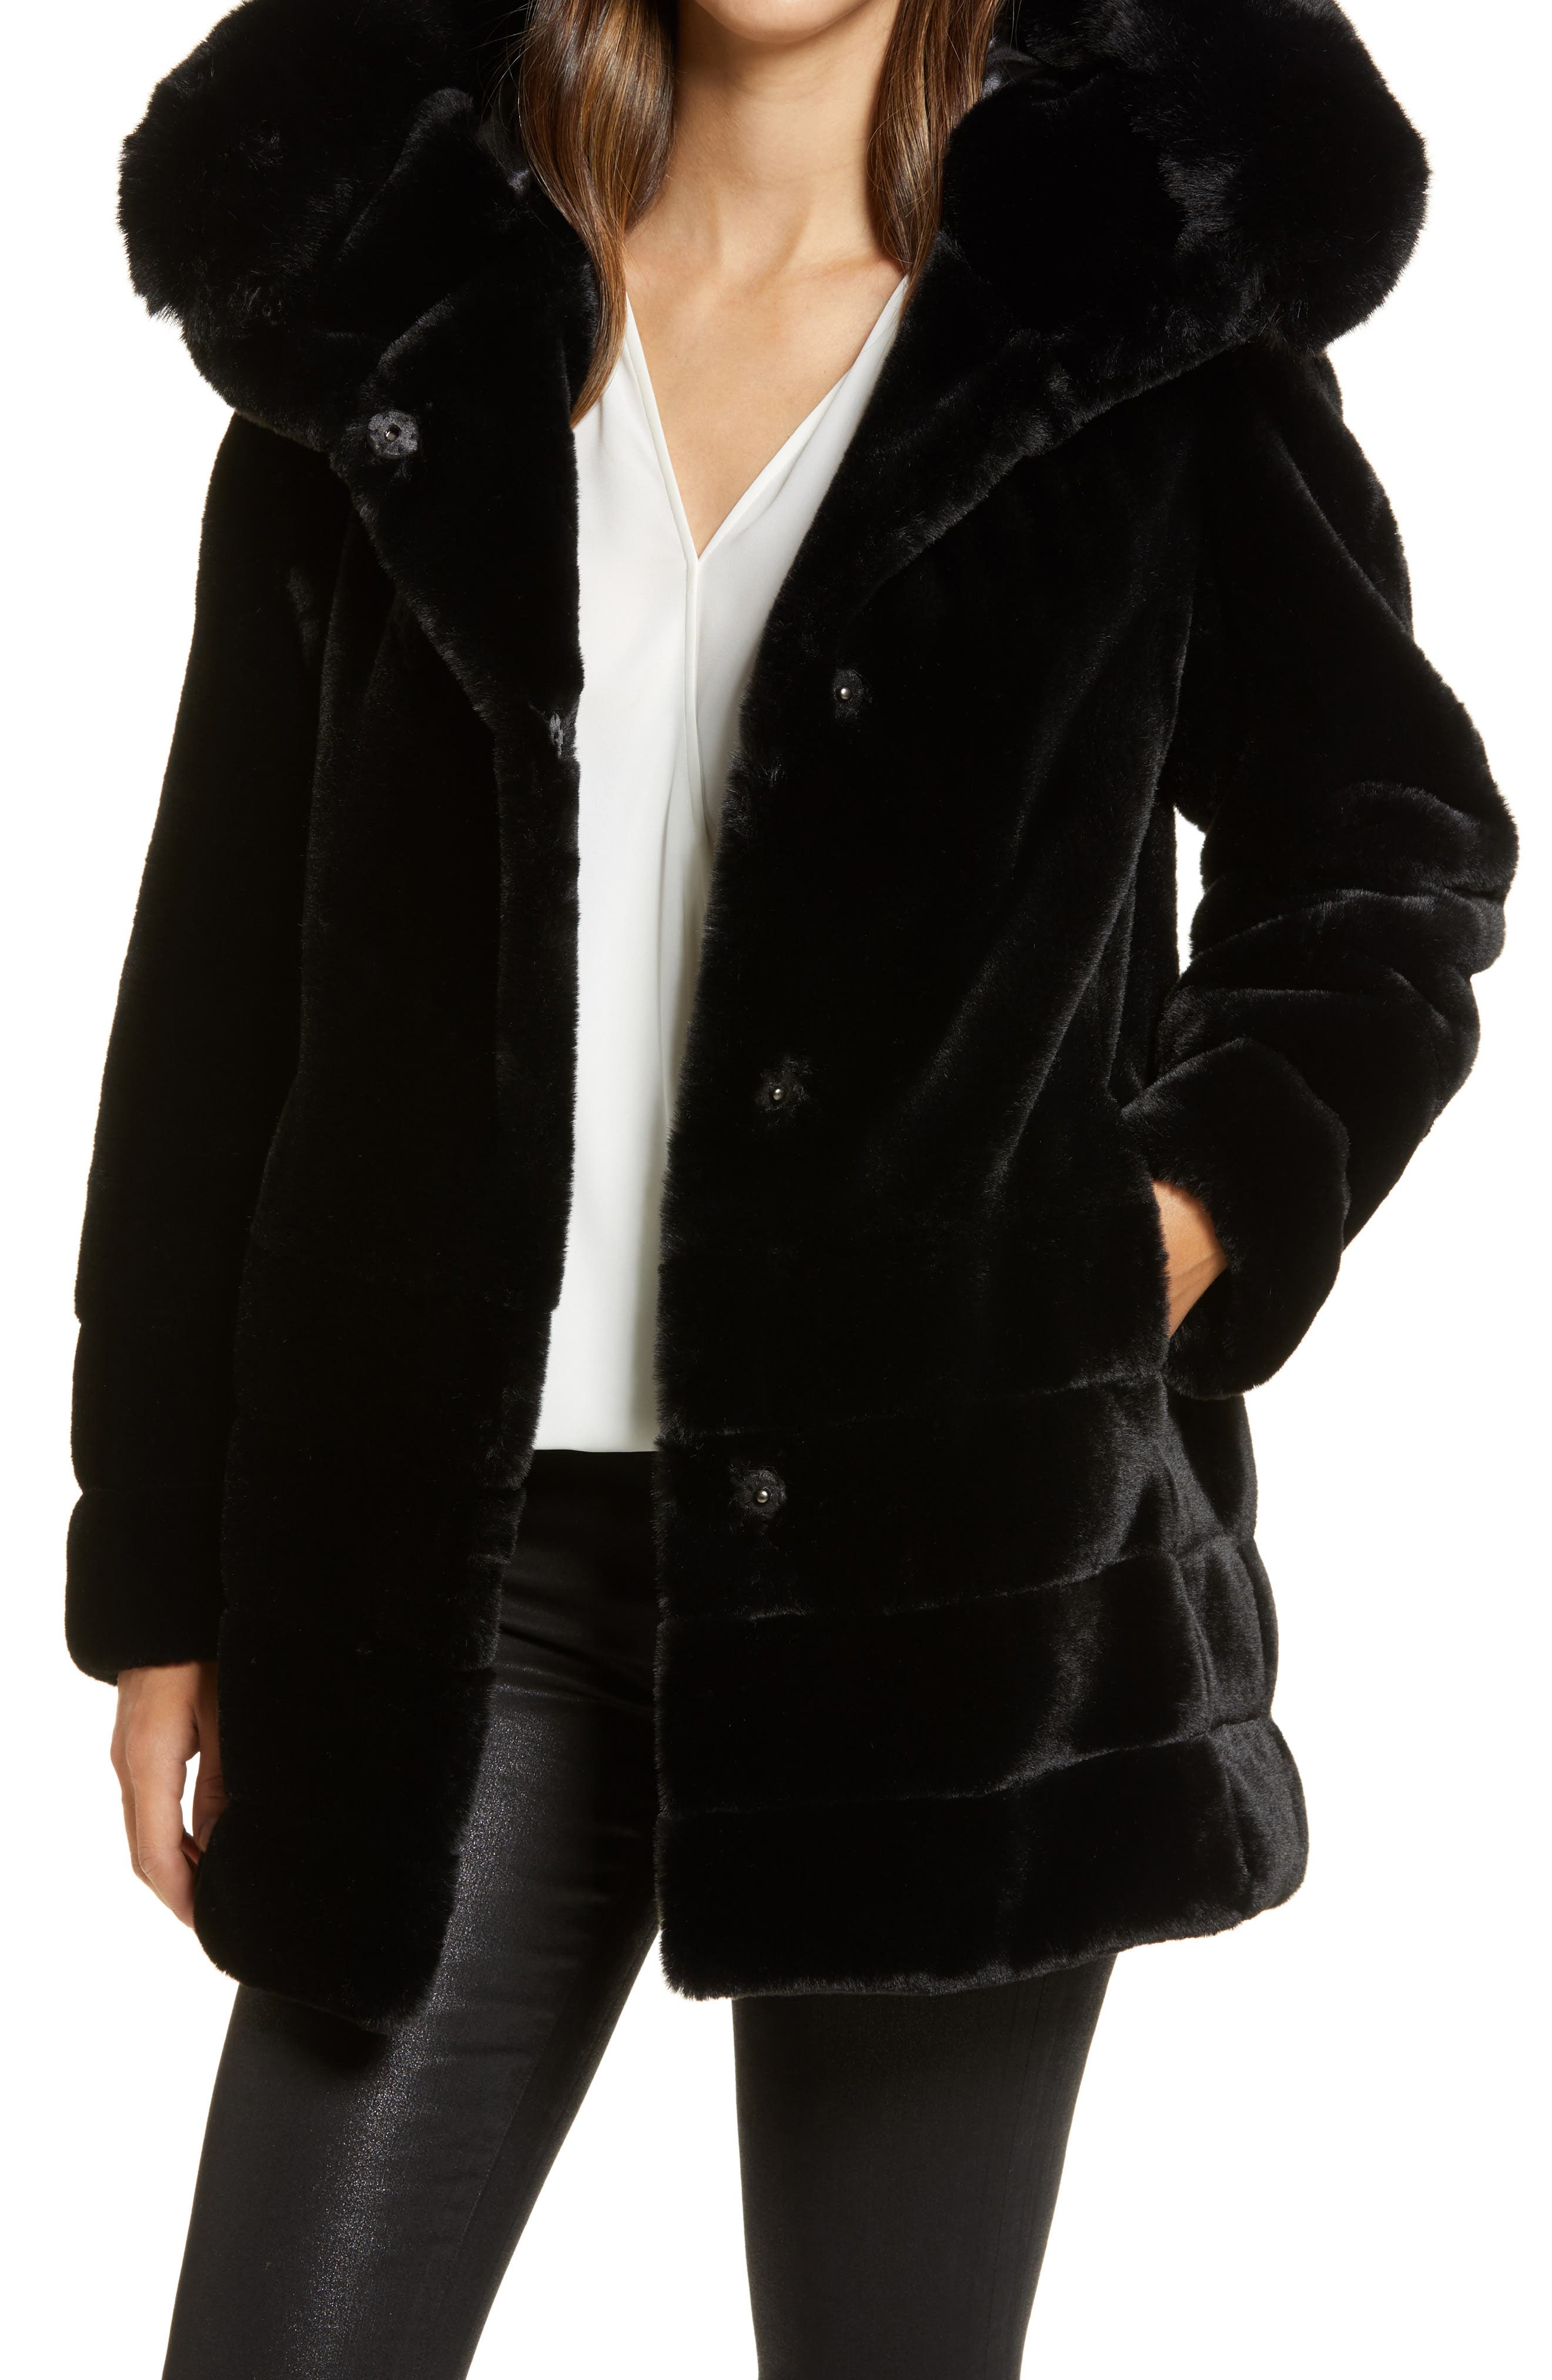 discount 66% WOMEN FASHION Jackets Fur Black M Yieli vest 